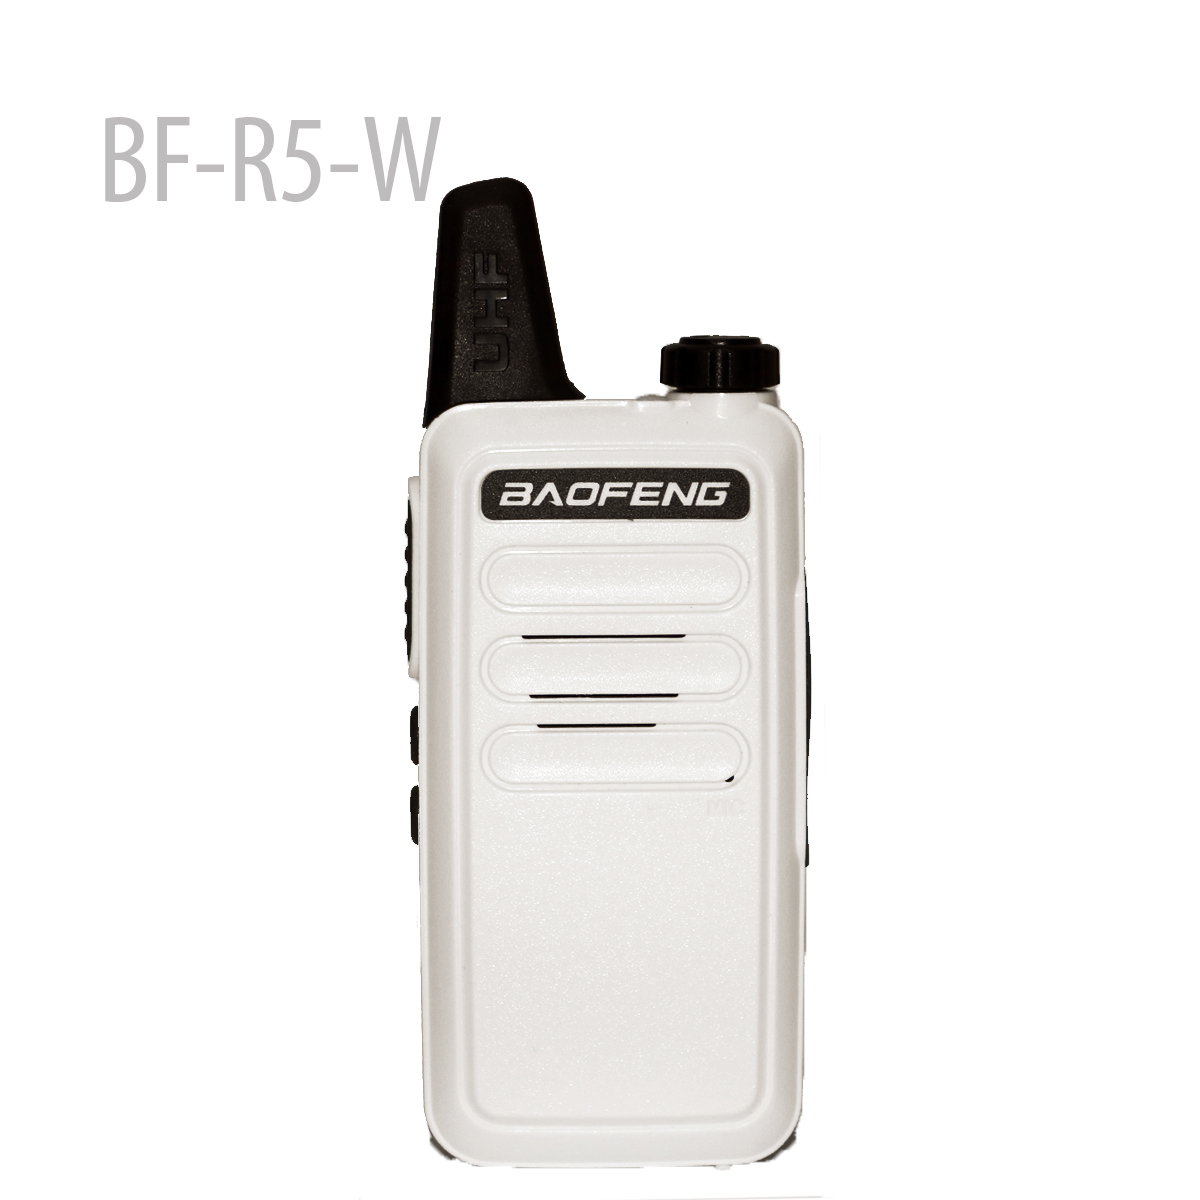 BAOFENG BF-R5-W Mini Portable two way radio UHF 400-470MHz 